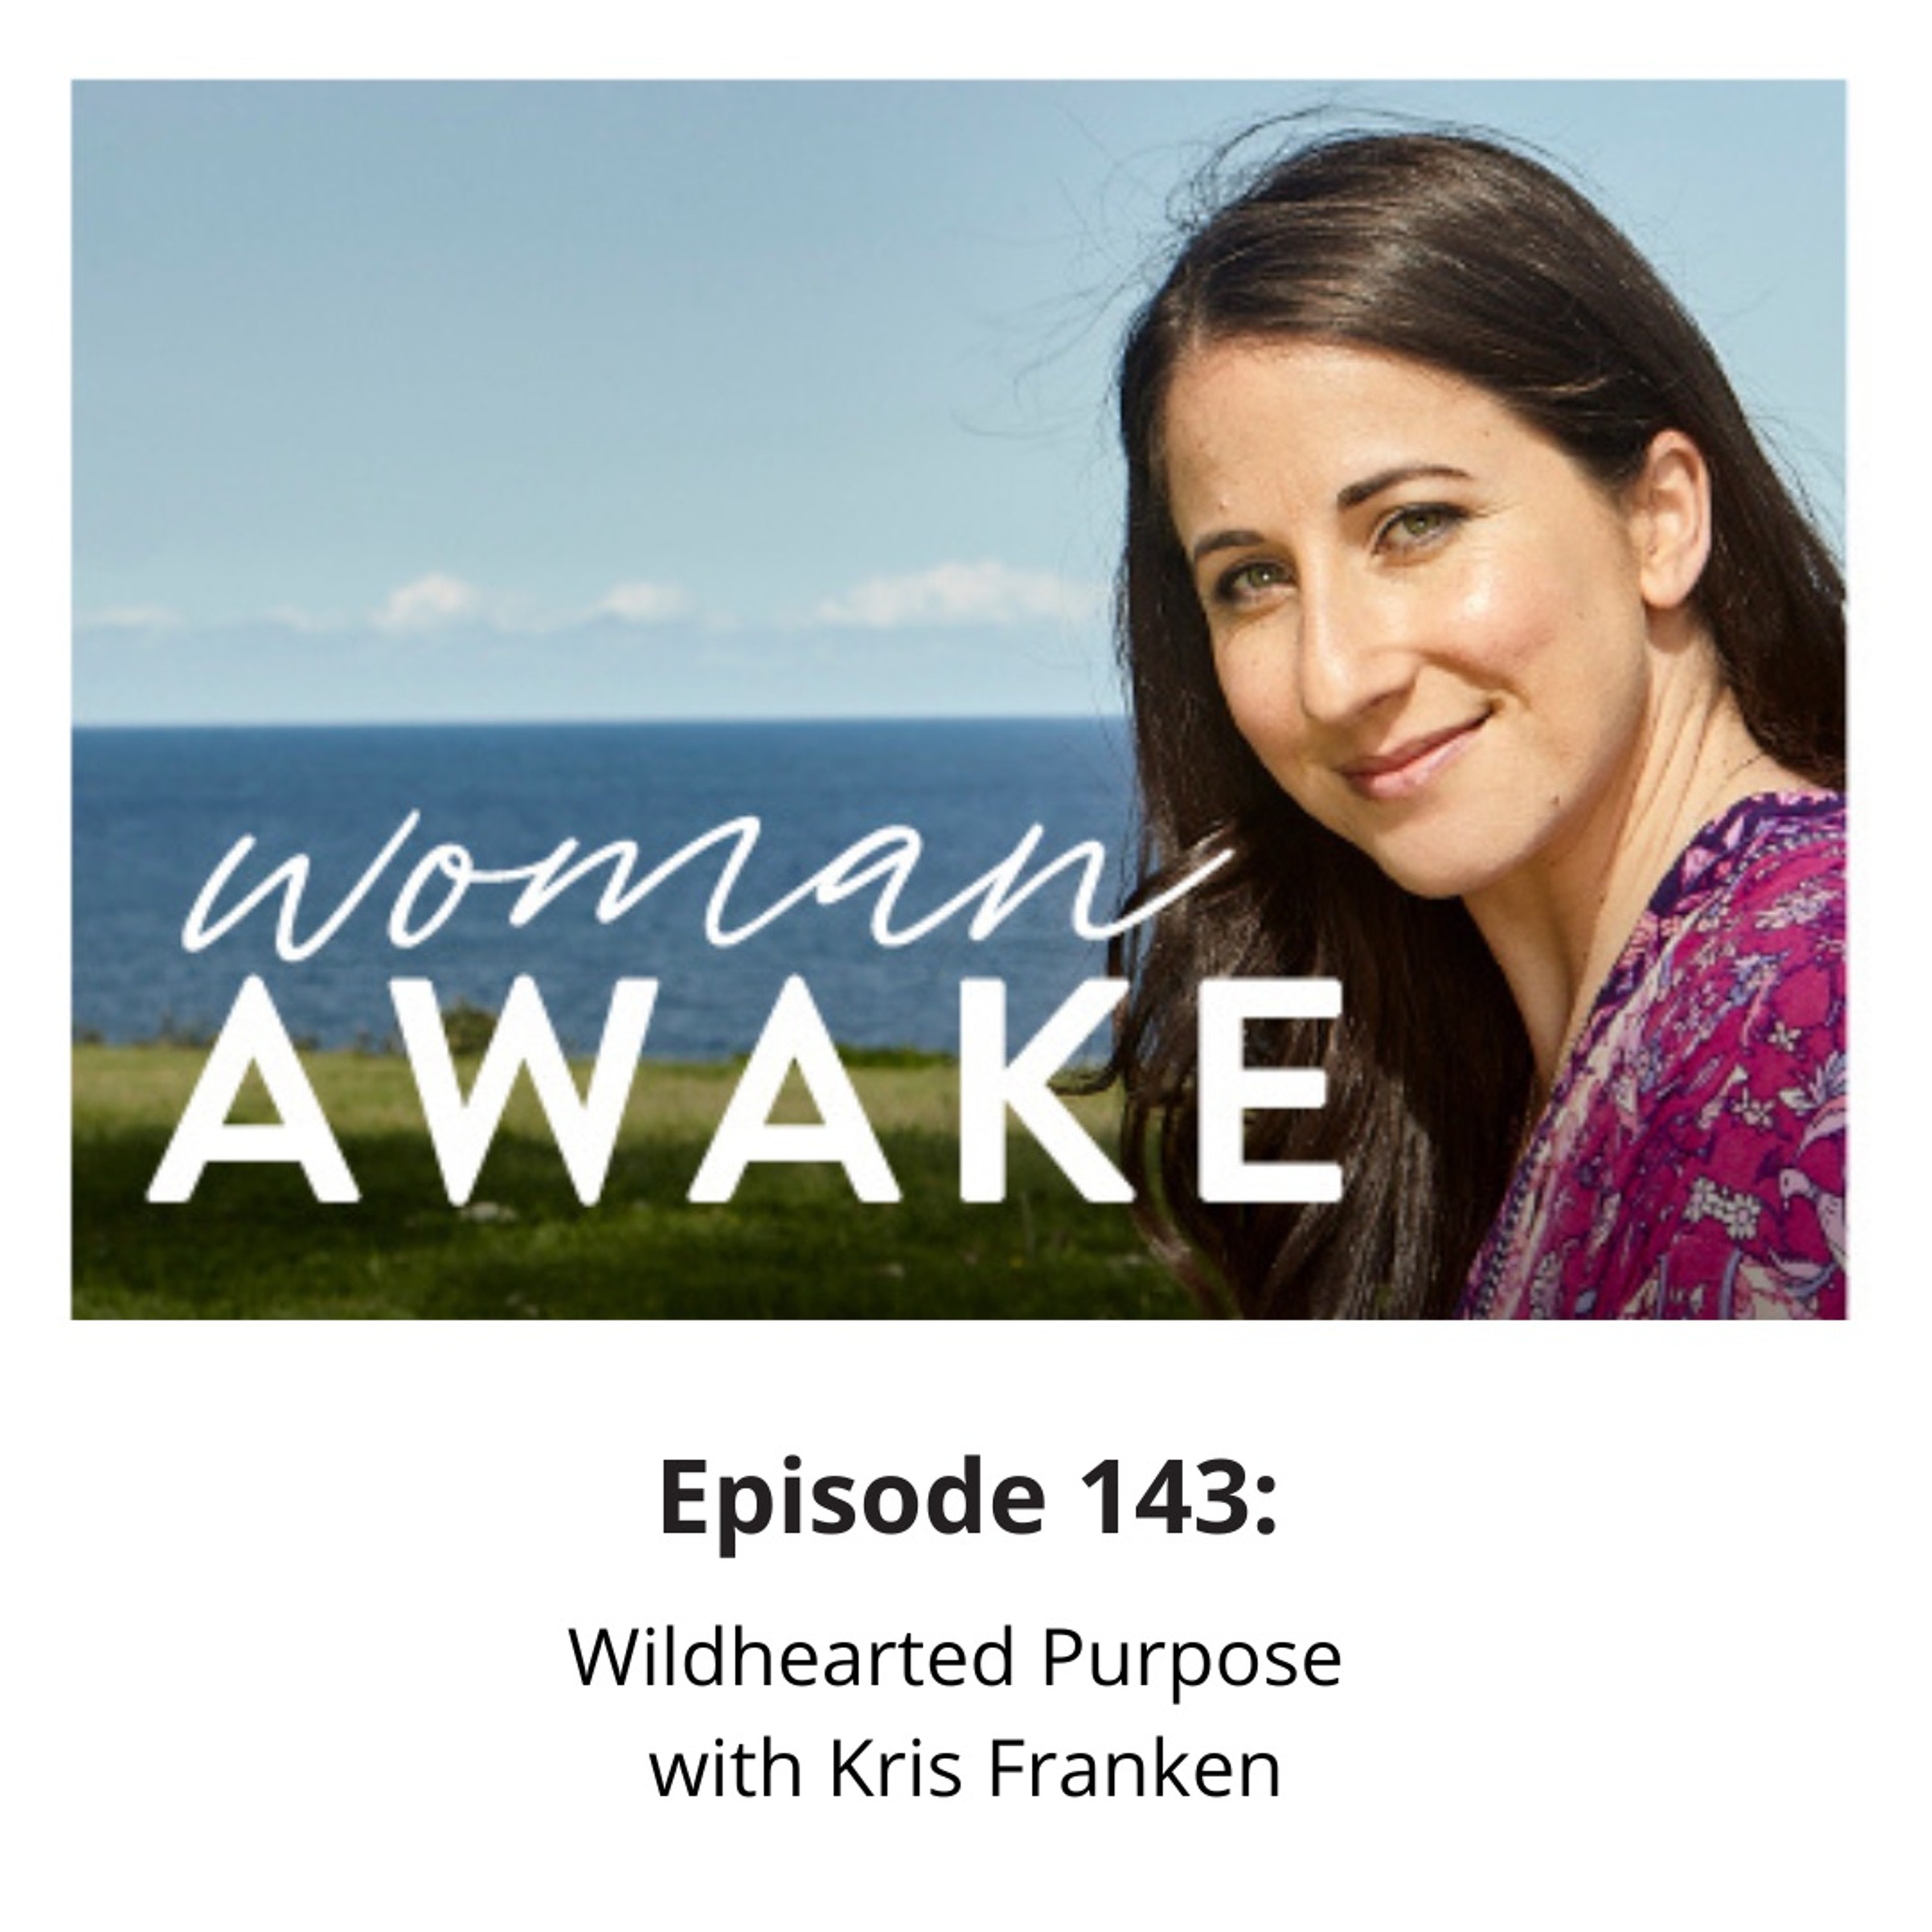 Woman Awake Episode 143- Wildhearted Purpose with Kris Franken